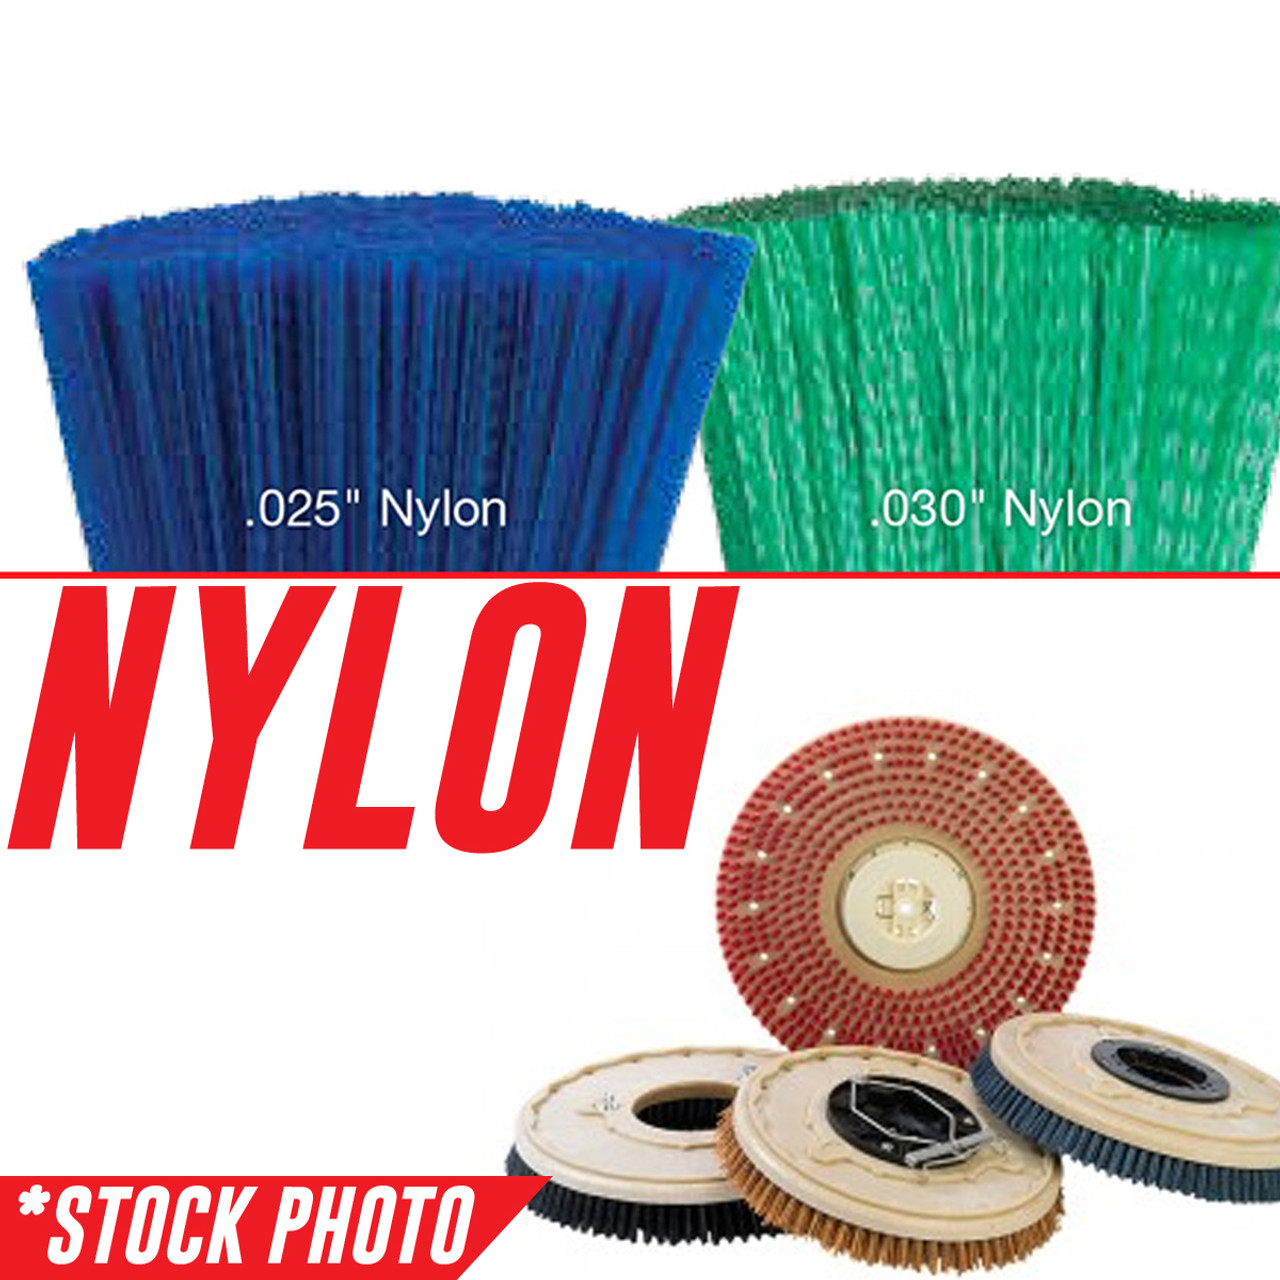 5-421N: 18" Rotary Brush .028" Nylon fits Factory Cat Models 3700, 38, 40, 40HD